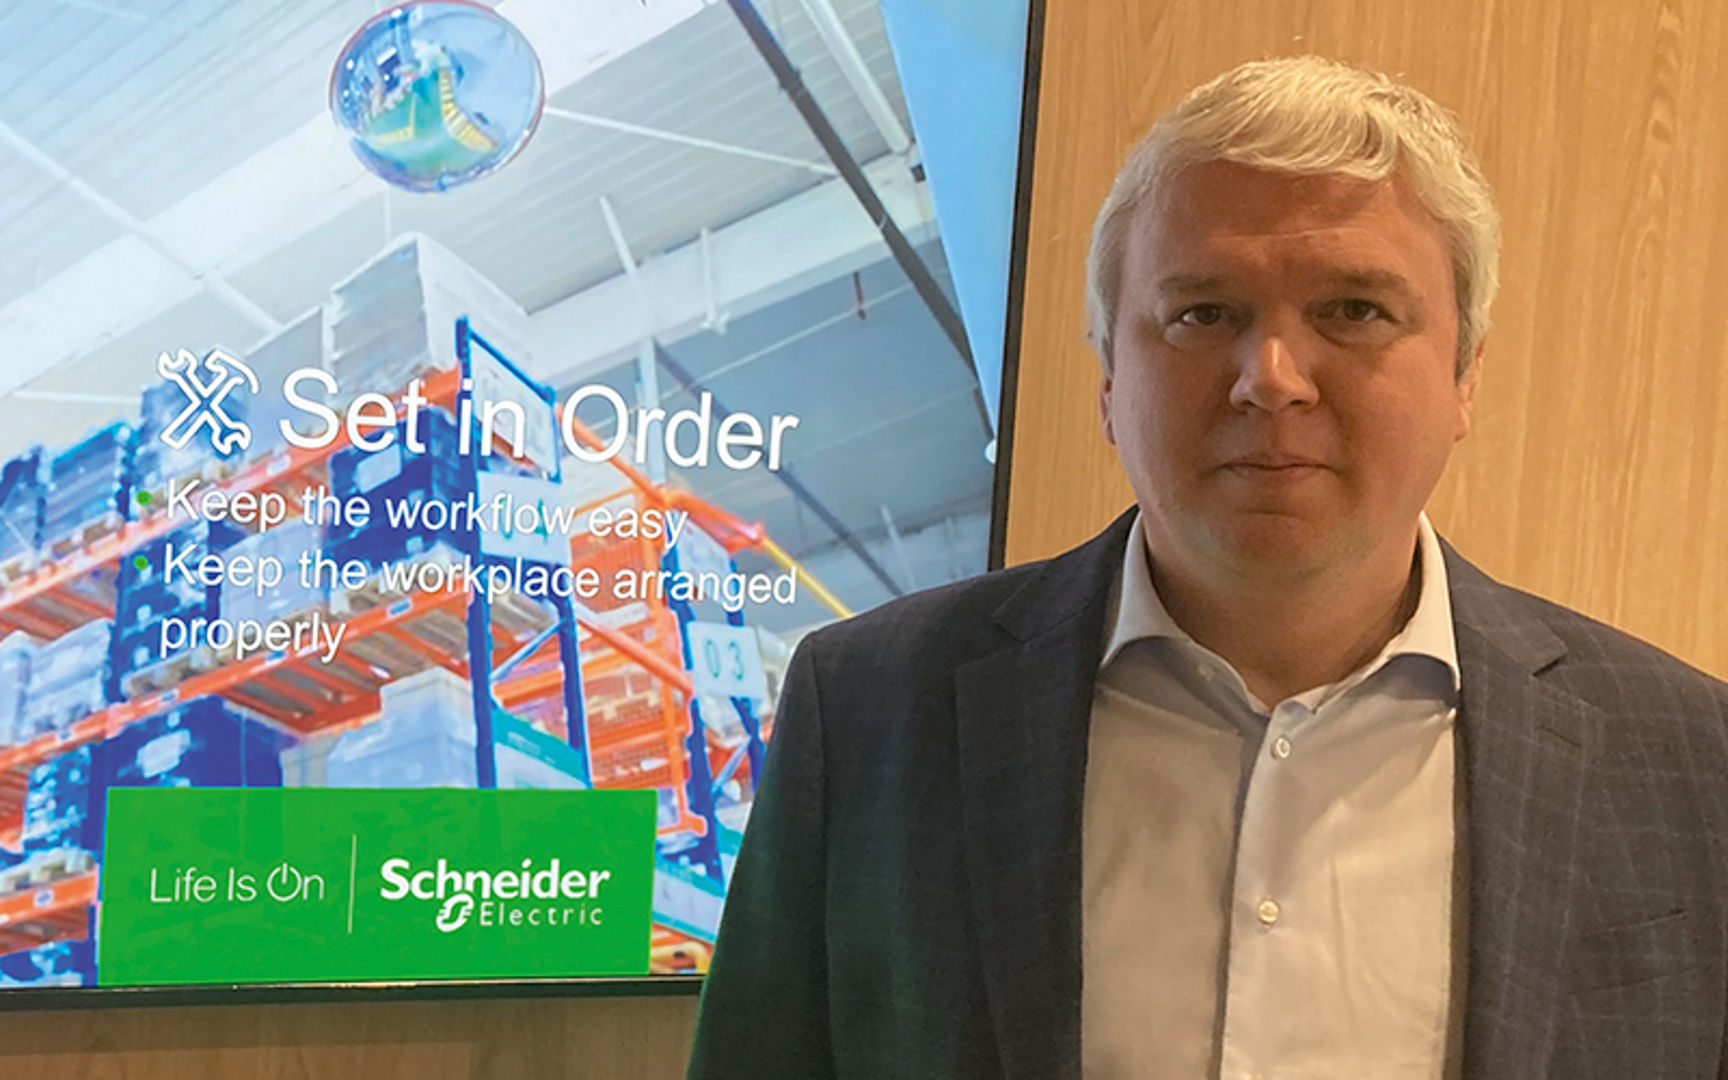 Henderik Buydens, Sales Support & Service Manager Industrial Automation bij Schneider Electric